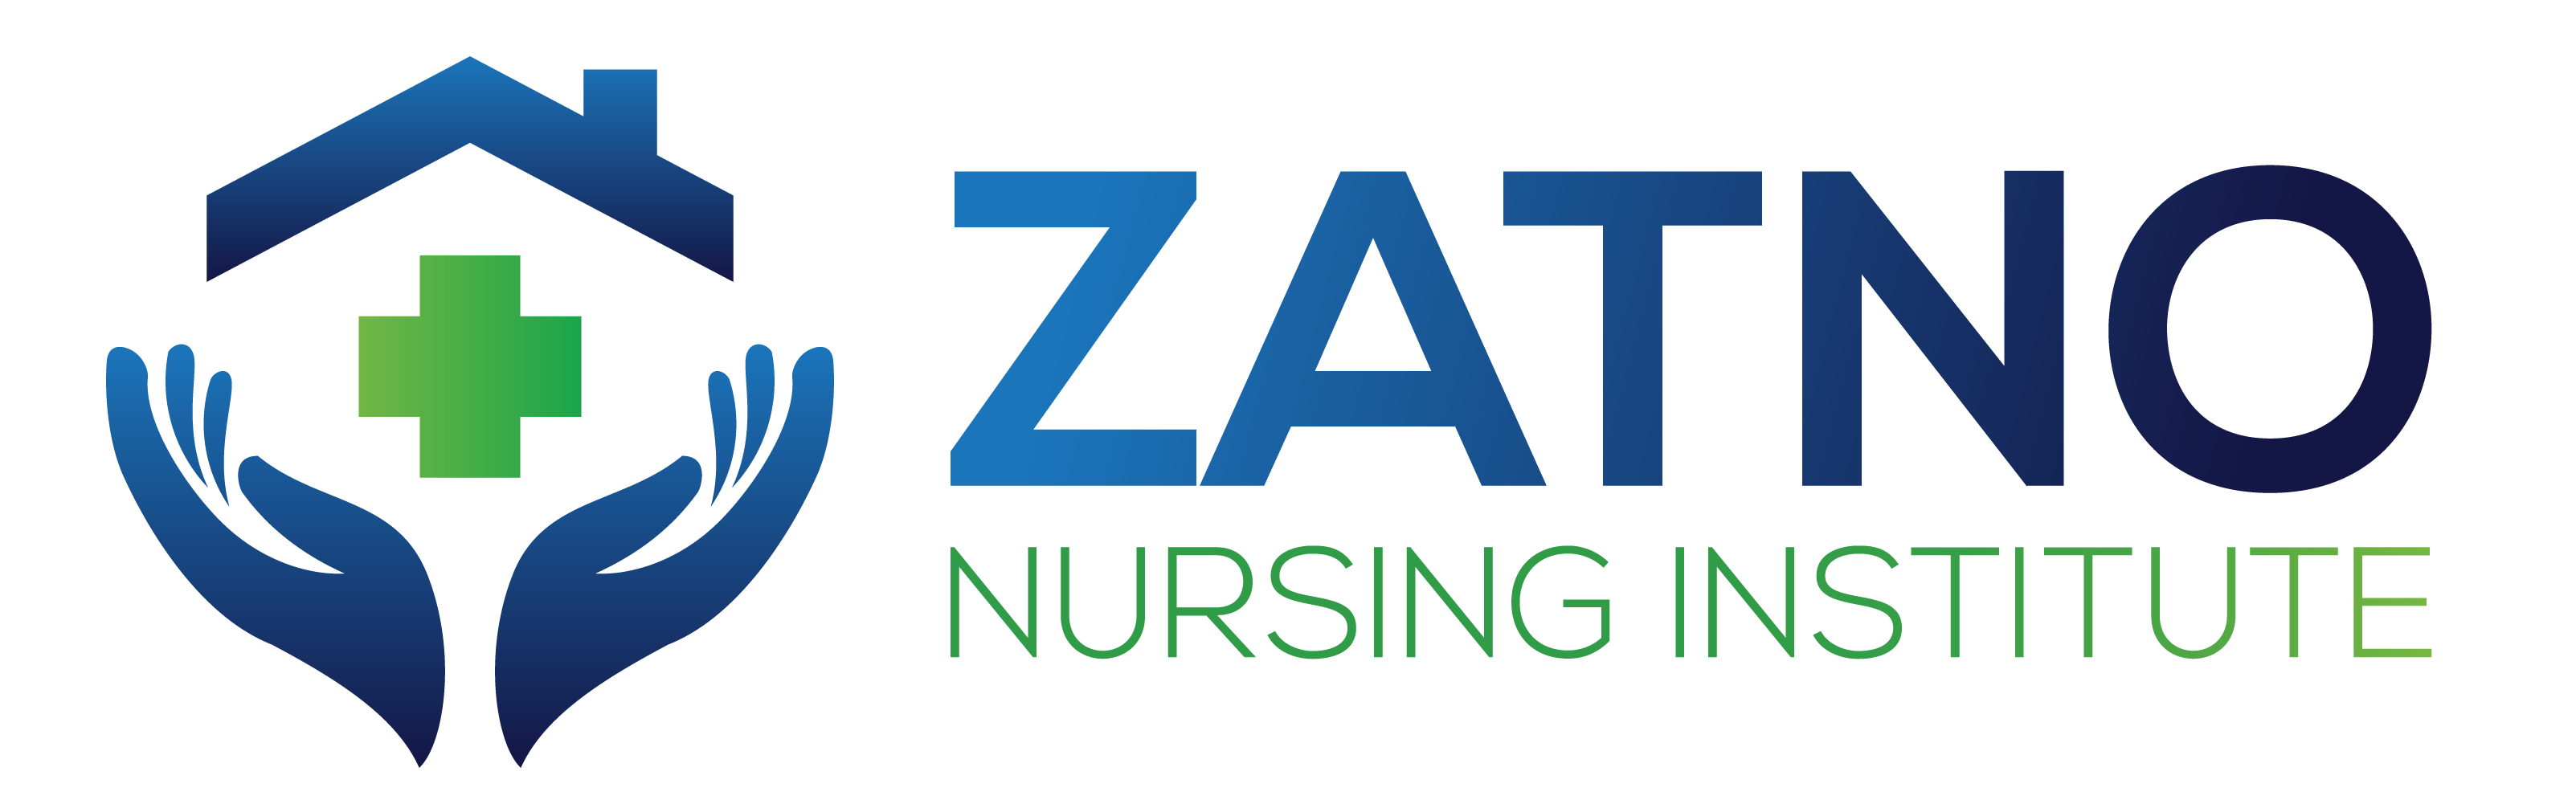 Zatno Nursing Institute